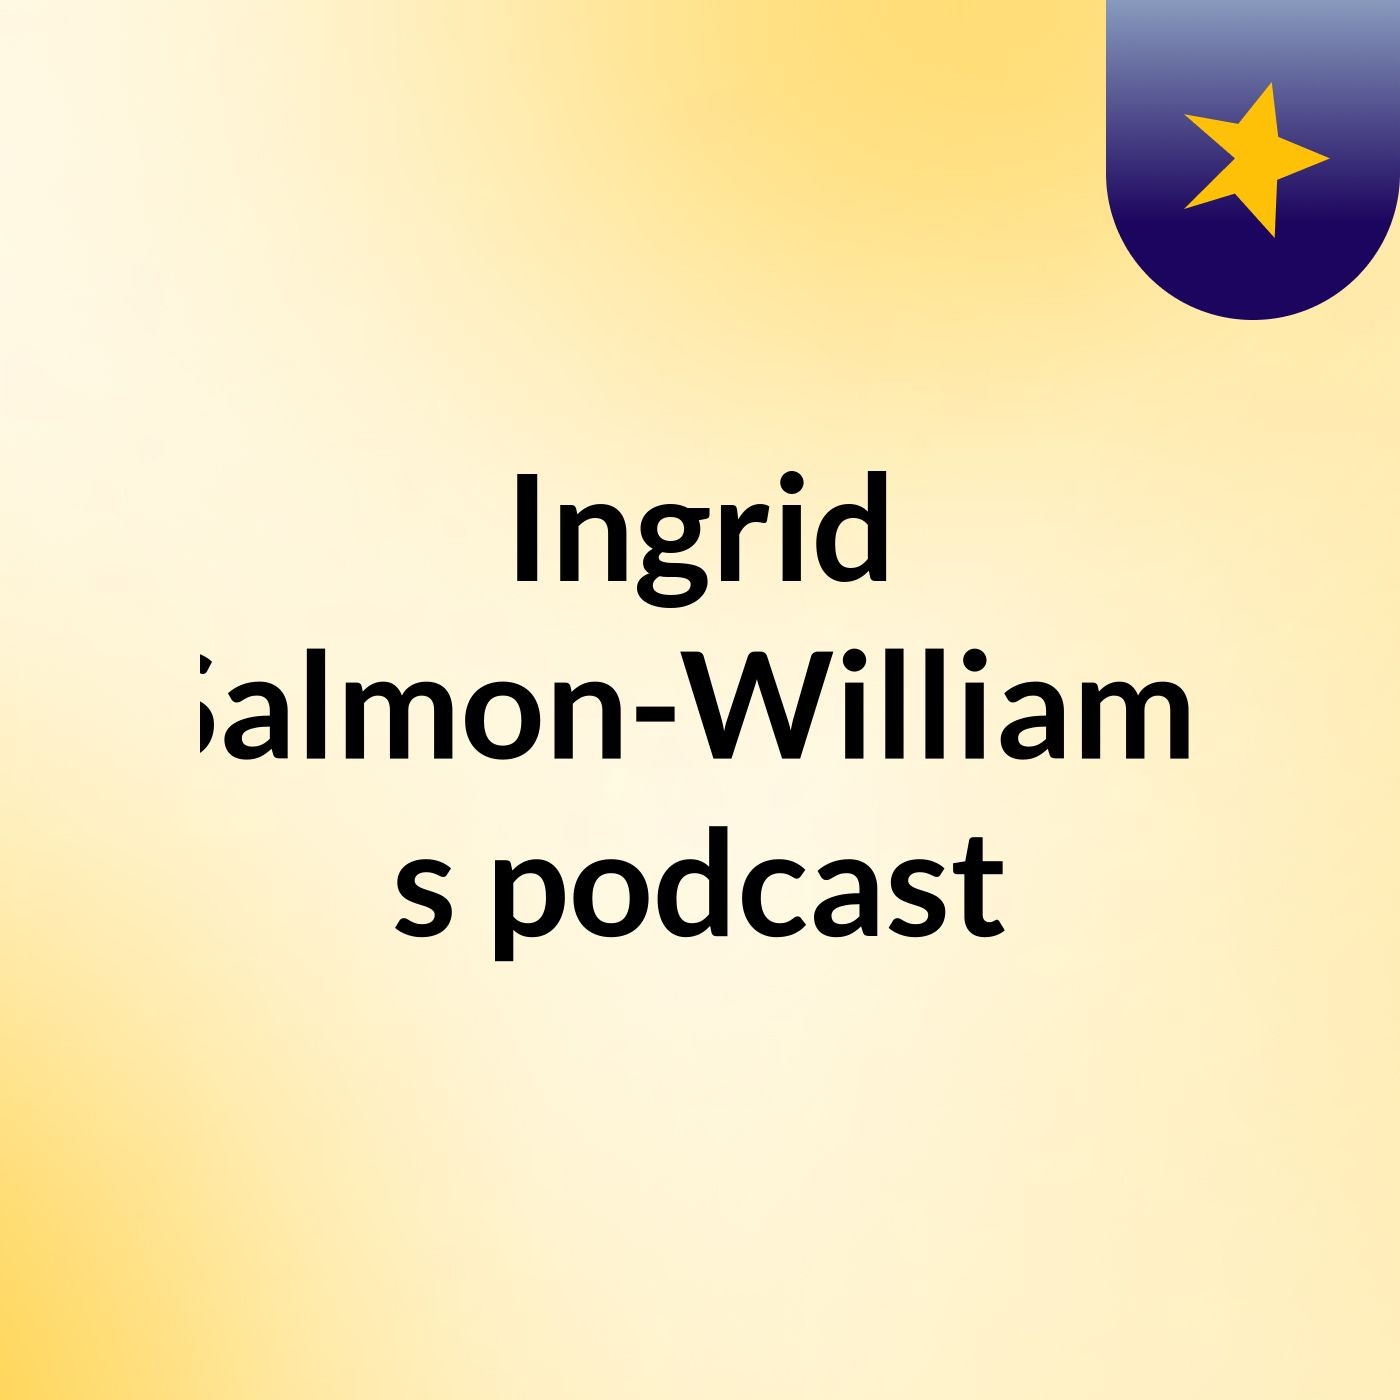 Ingrid Salmon-Williams's podcast